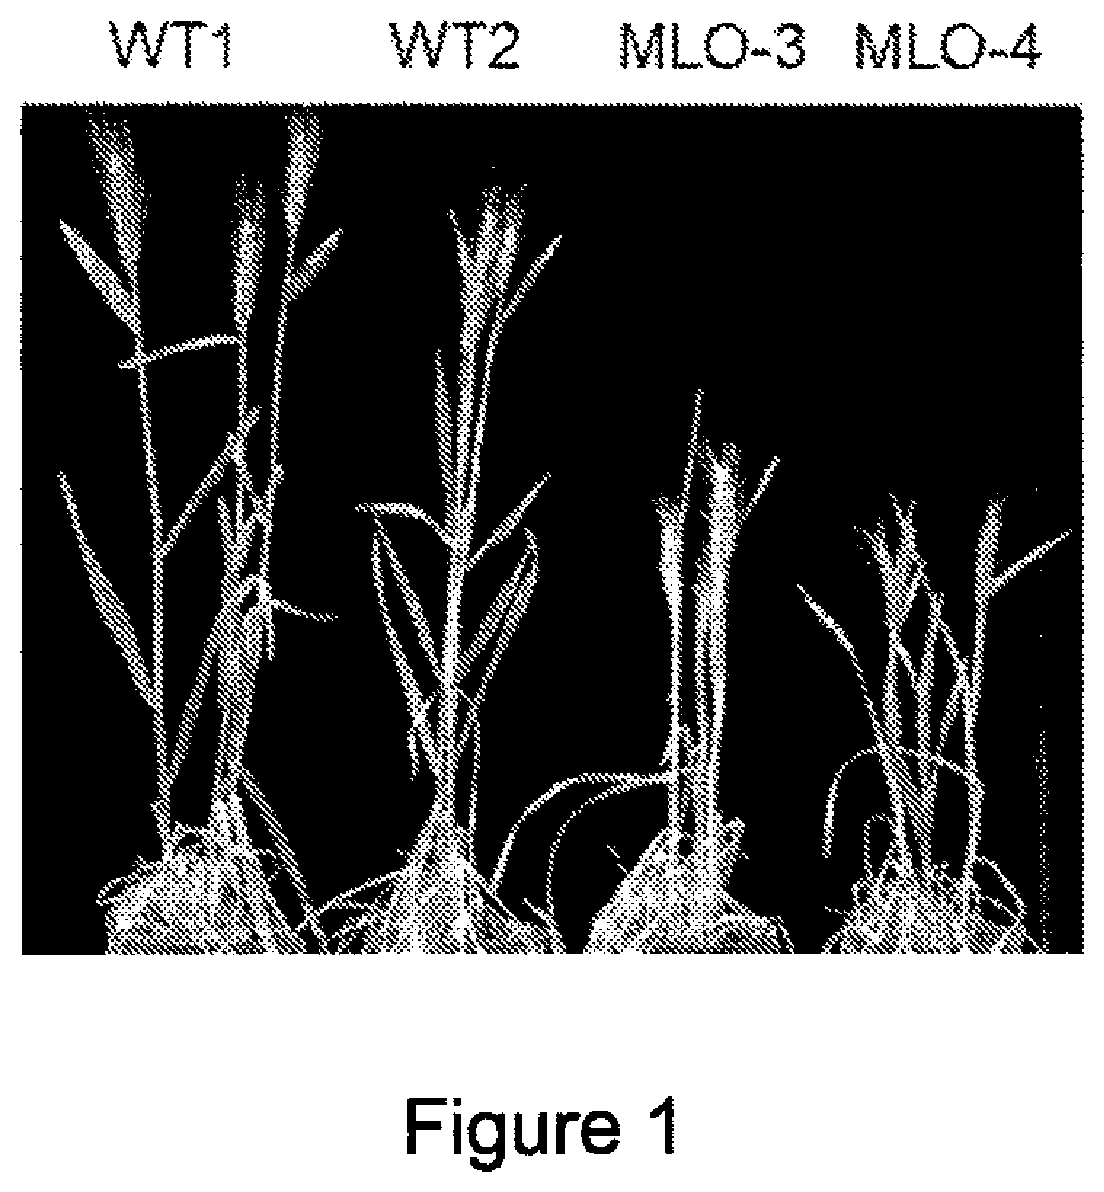 Wheat plants resistant to powdery mildew